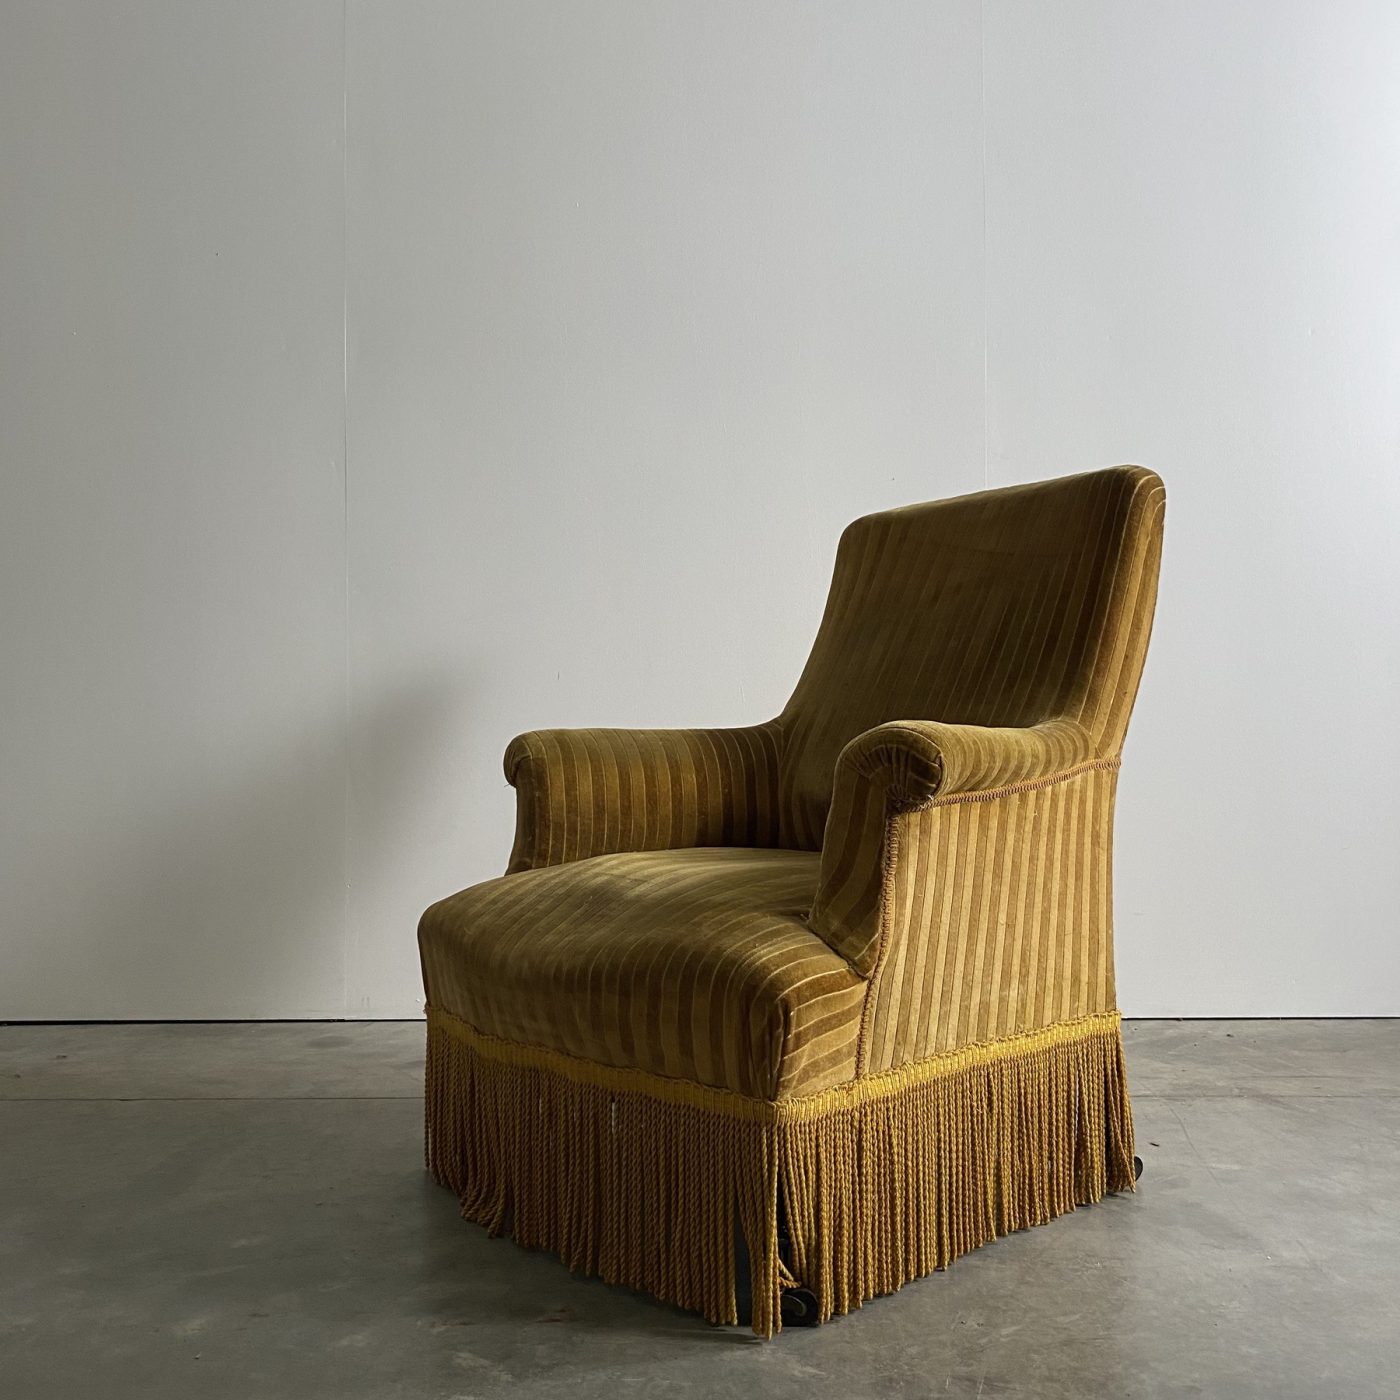 objet-vagabond-napoleon-chairs0001